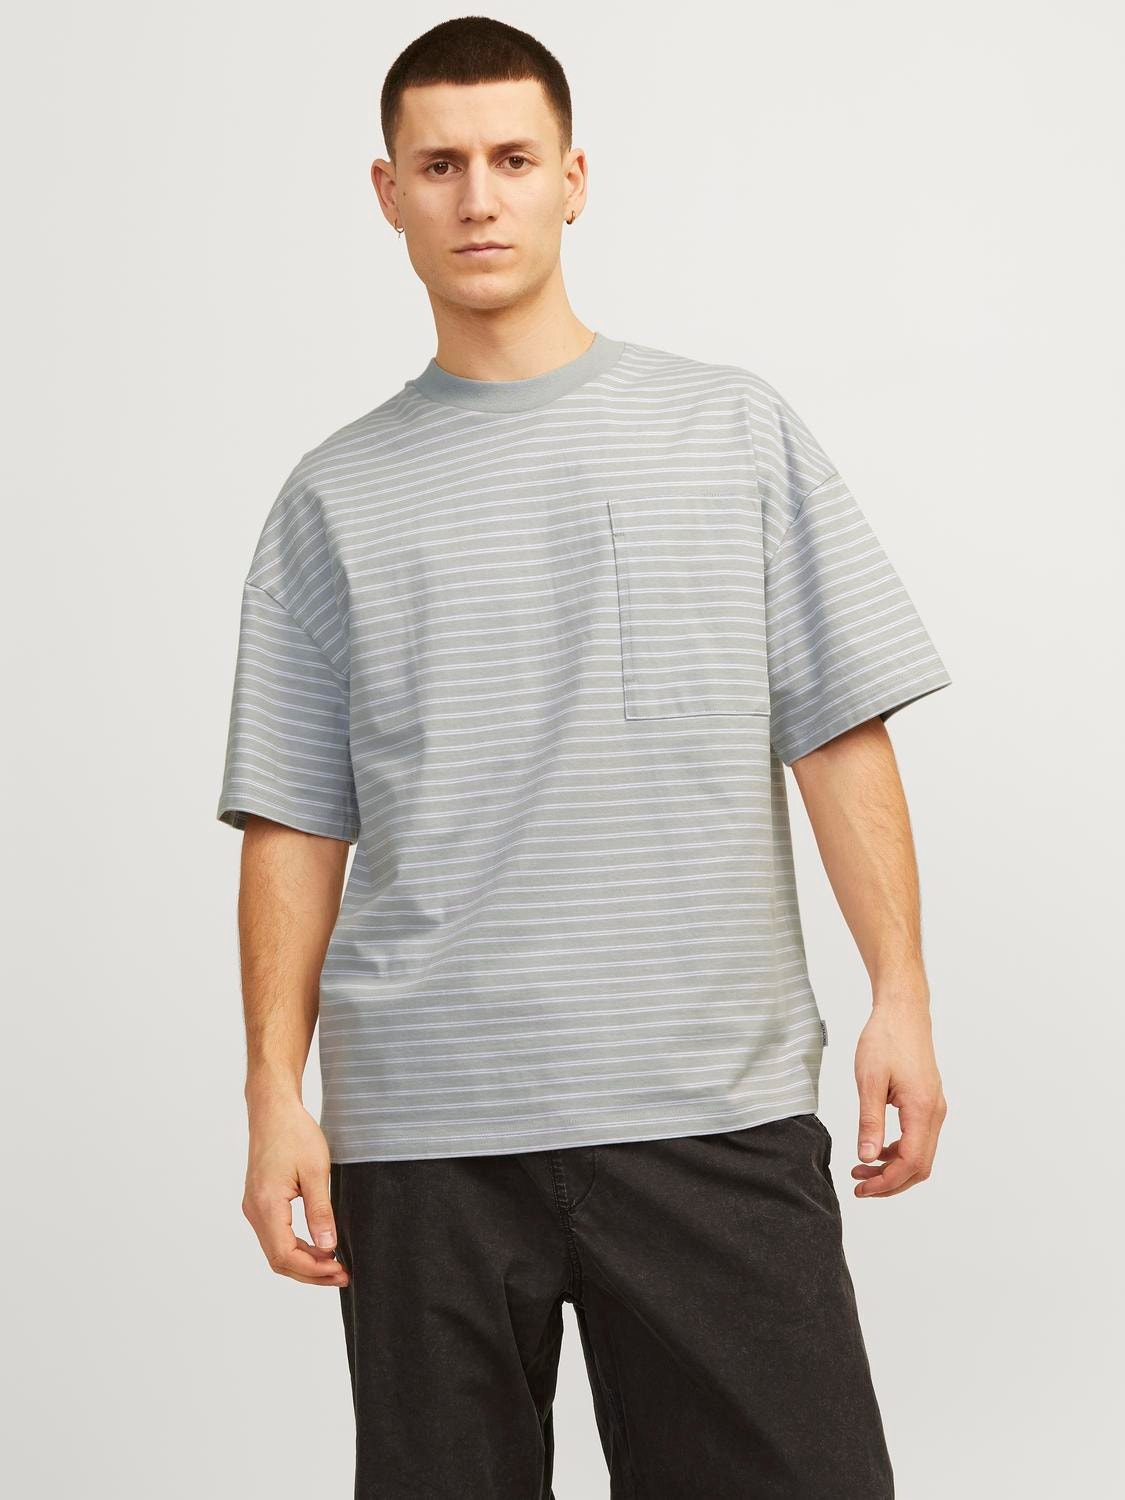 Jack & Jones Camiseta Rayas Cuello redondo -High-rise - 12256536